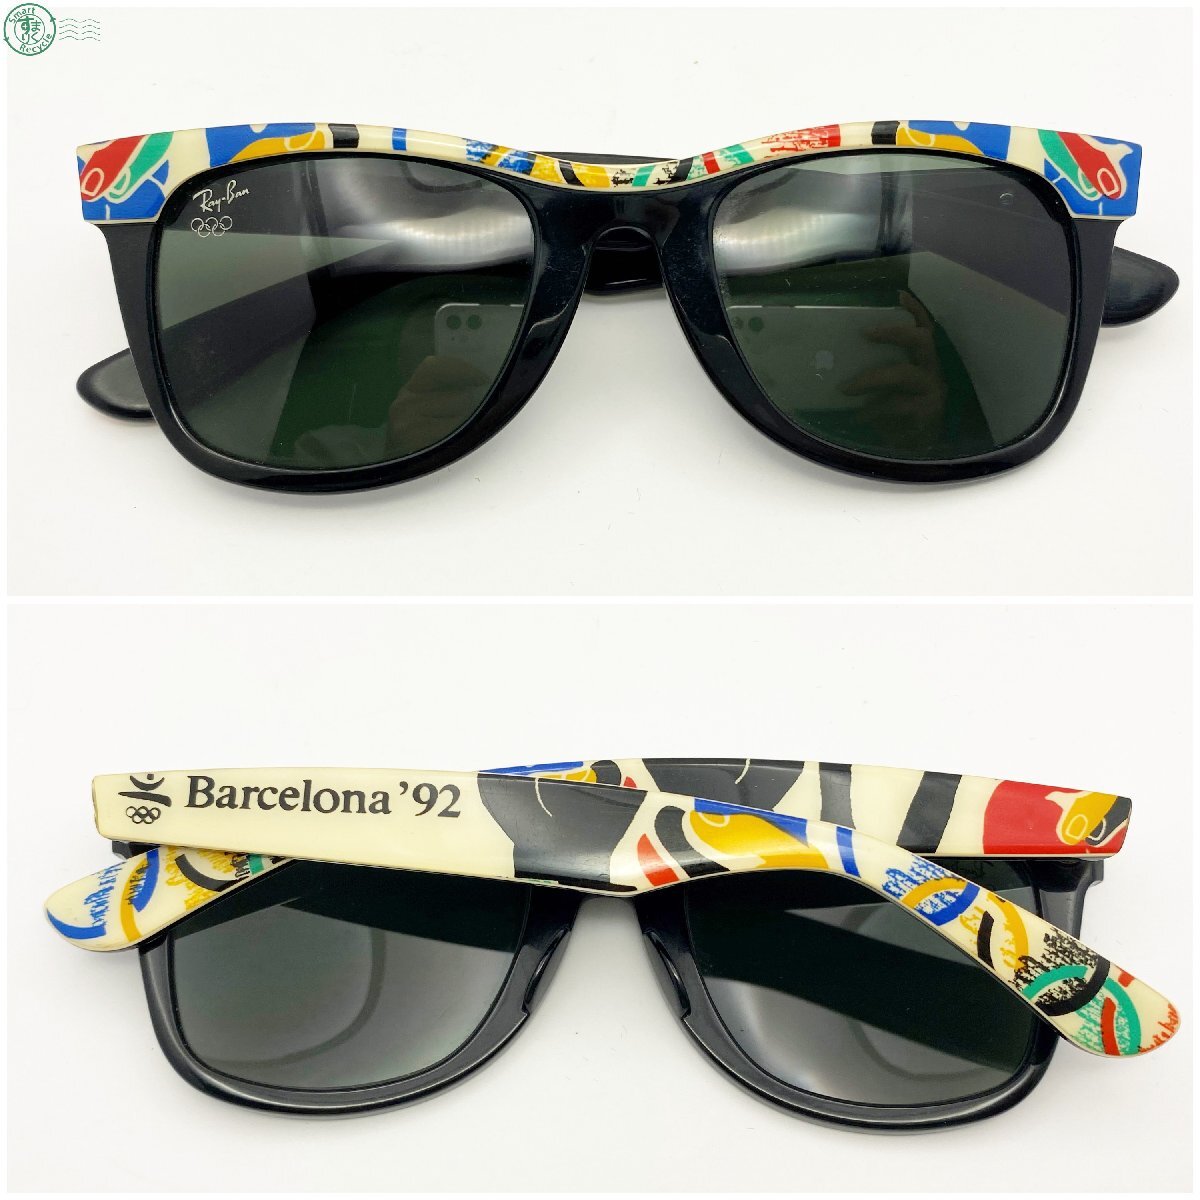 2405600102 ^ Ray-Ban RayBan sunglasses SPORT WAYFARER 1992 year Barcelona Olympic model B&Lboshu rom I wear used 